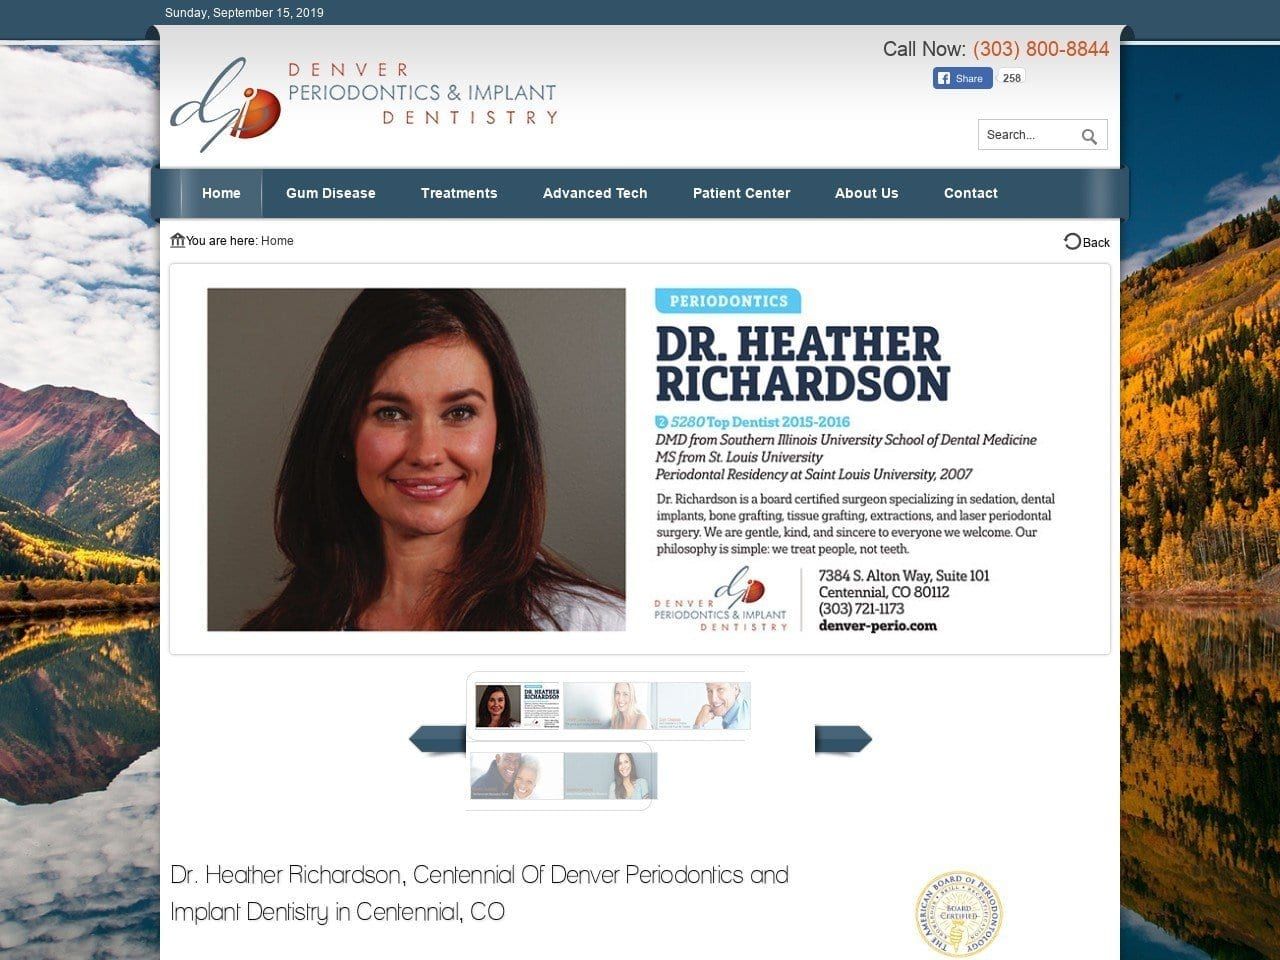 Dr. Katherine D. Wilson and Dr. Jeffrey Fowler Website Screenshot from denver-perio.com